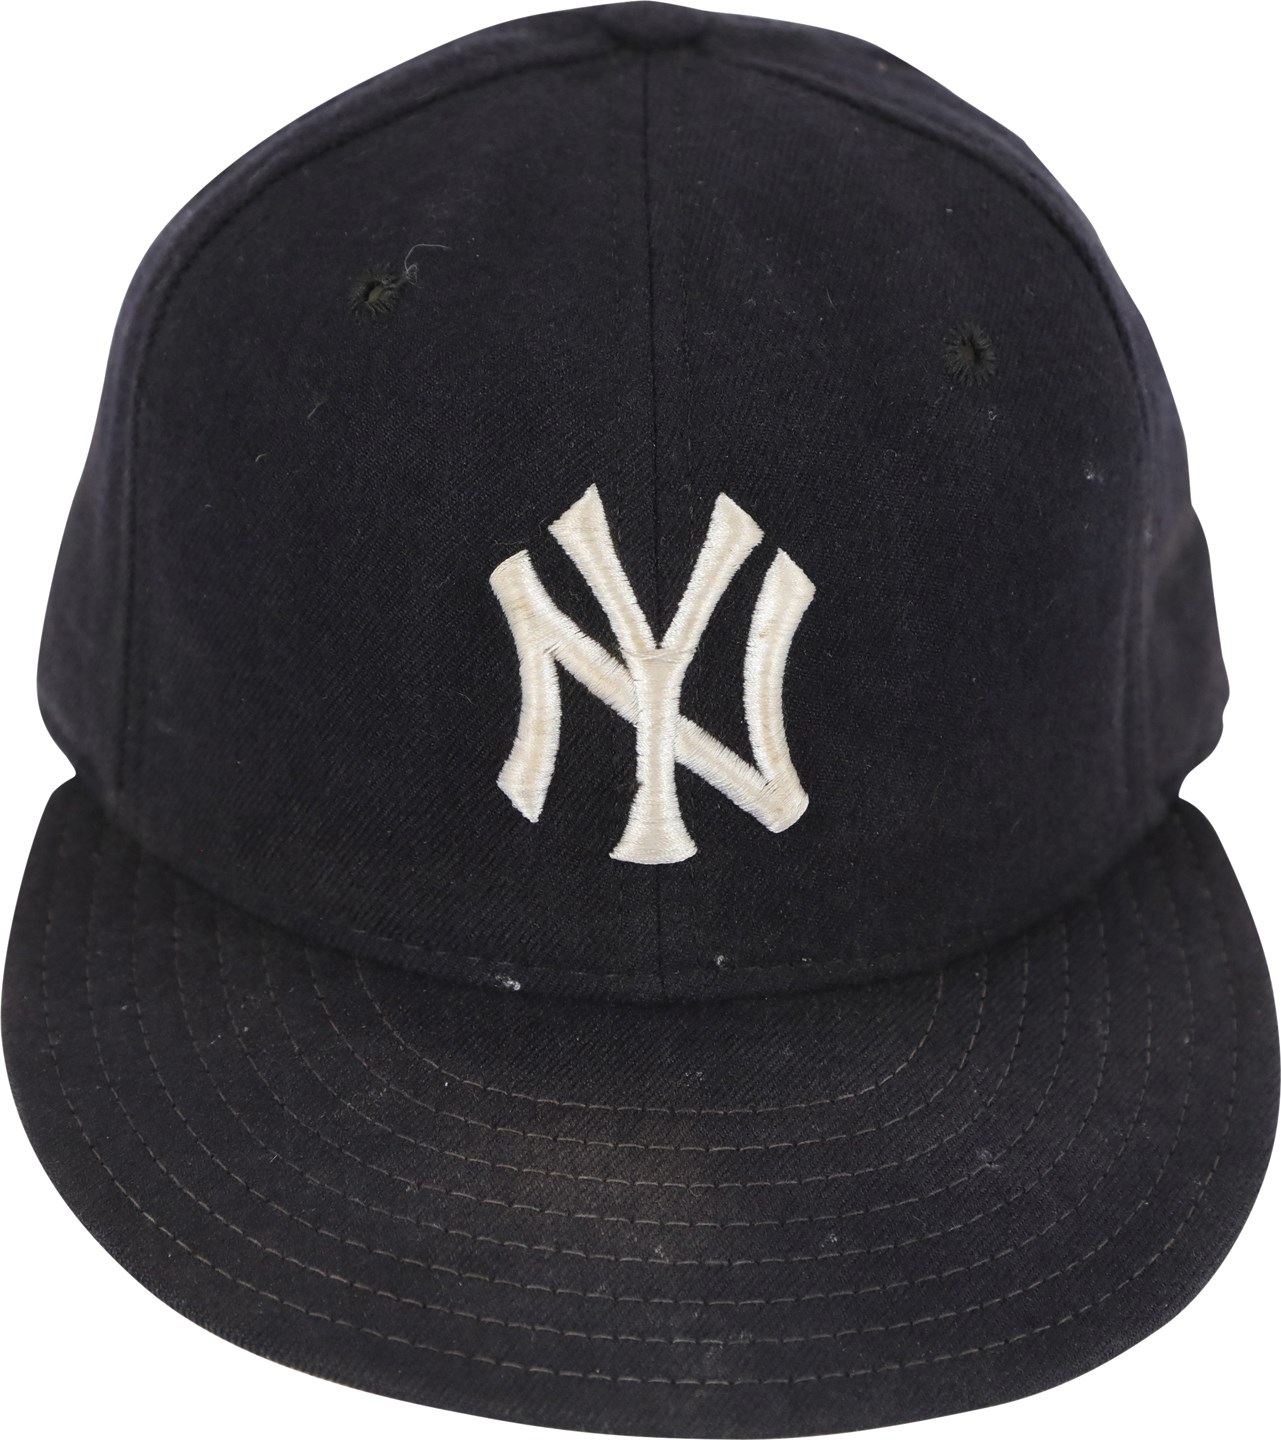 - Circa 1995 Bernie Williams New York Yankees Game Used Hat